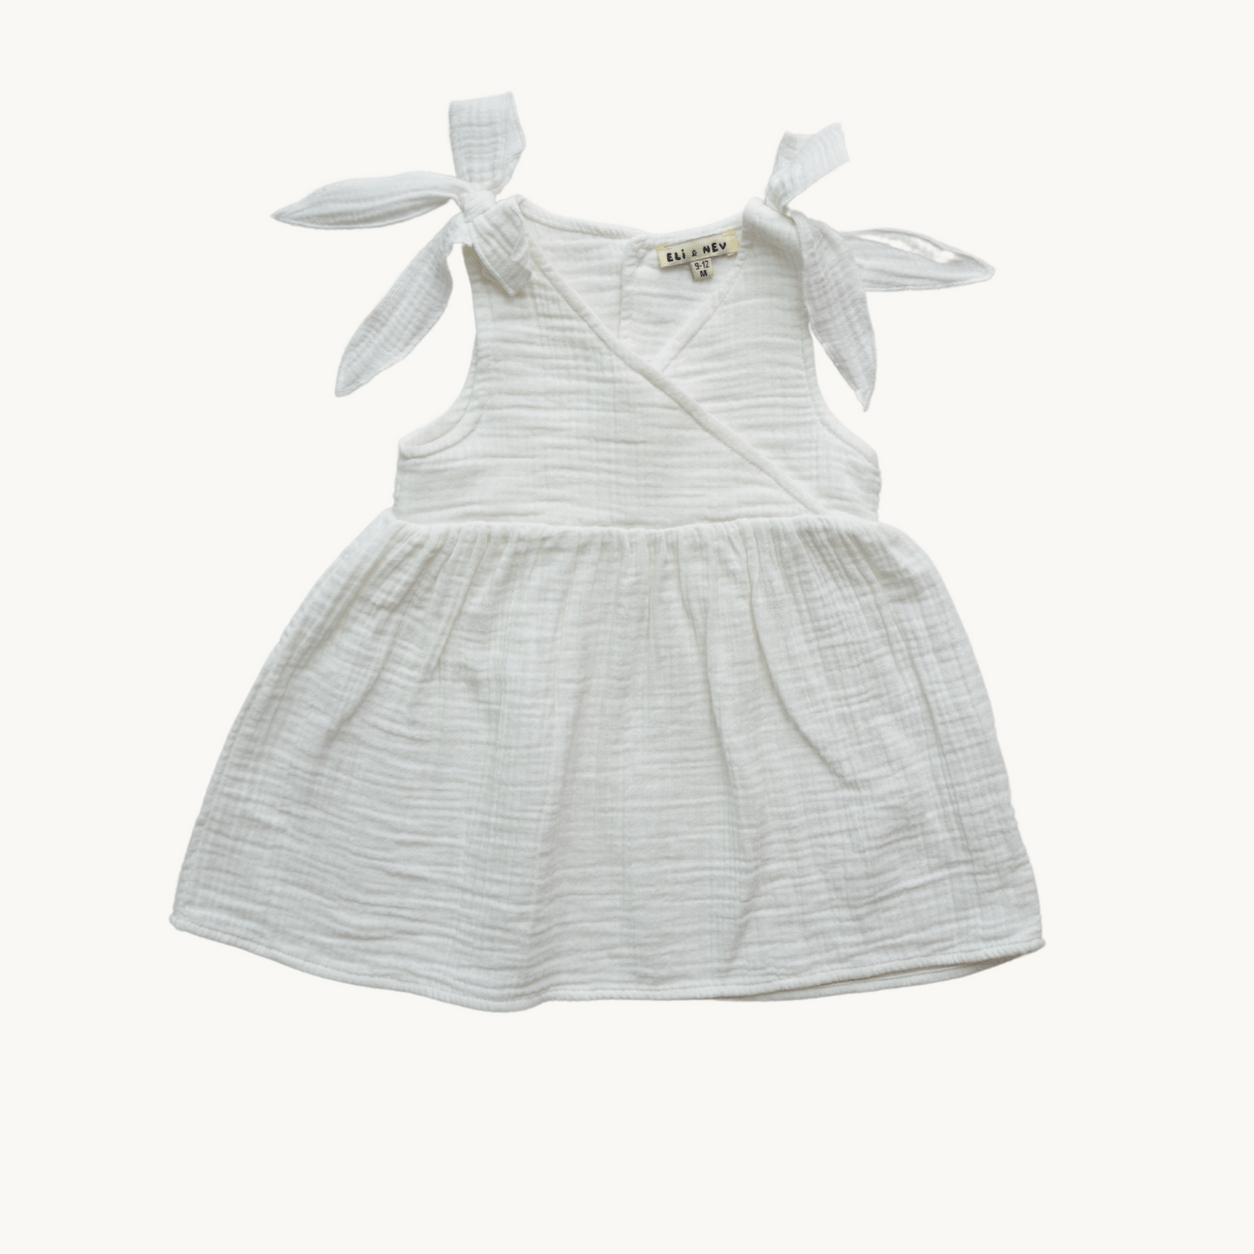 Eli + Nev Dress Shoulder Tie Girls Dress (White)